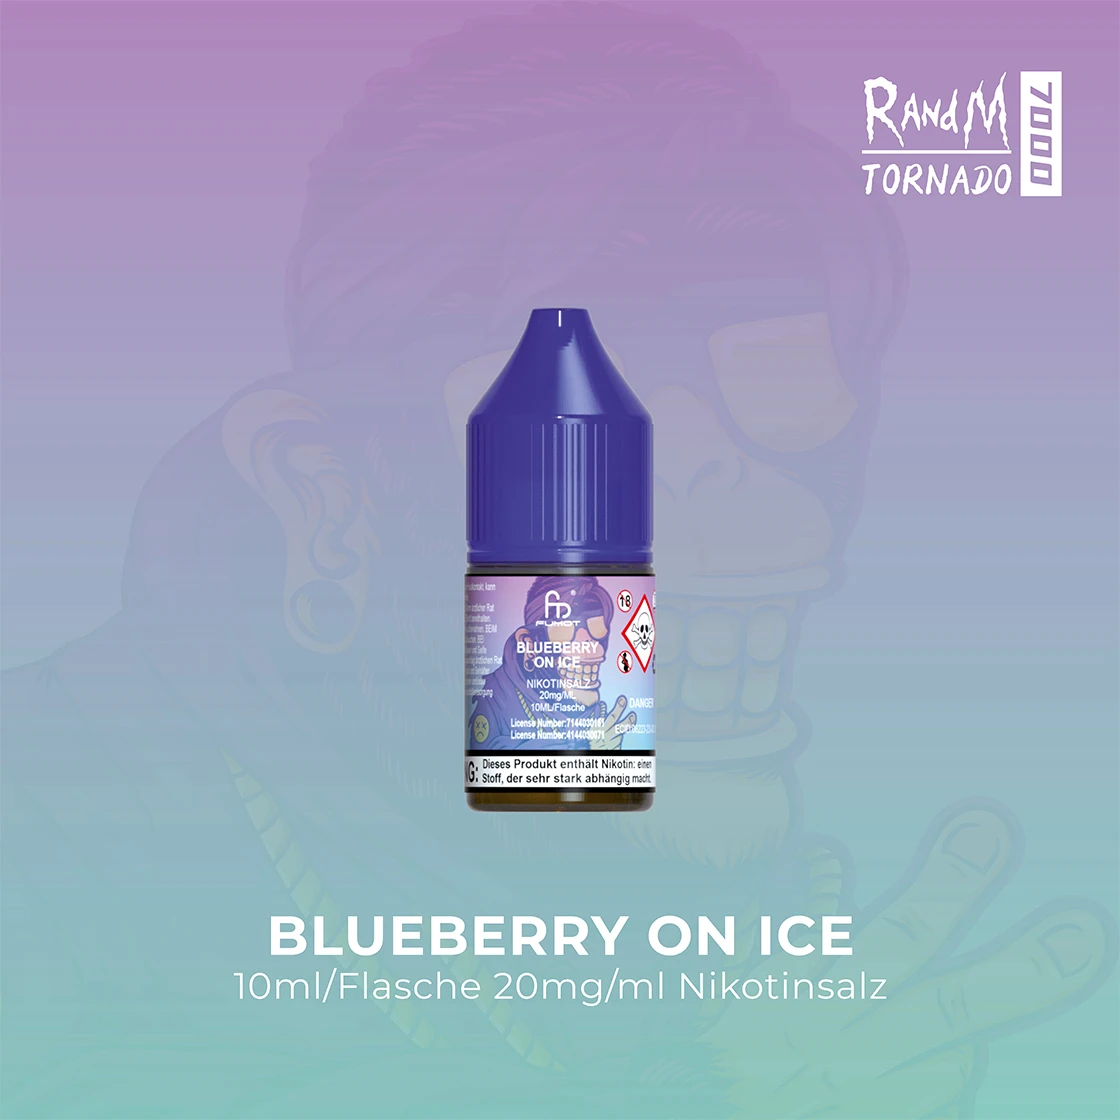 RandM Tornado 7000 Blueberry on Ice E-Liquid Nikotinsalz 20 mg | Vape Liquids 1